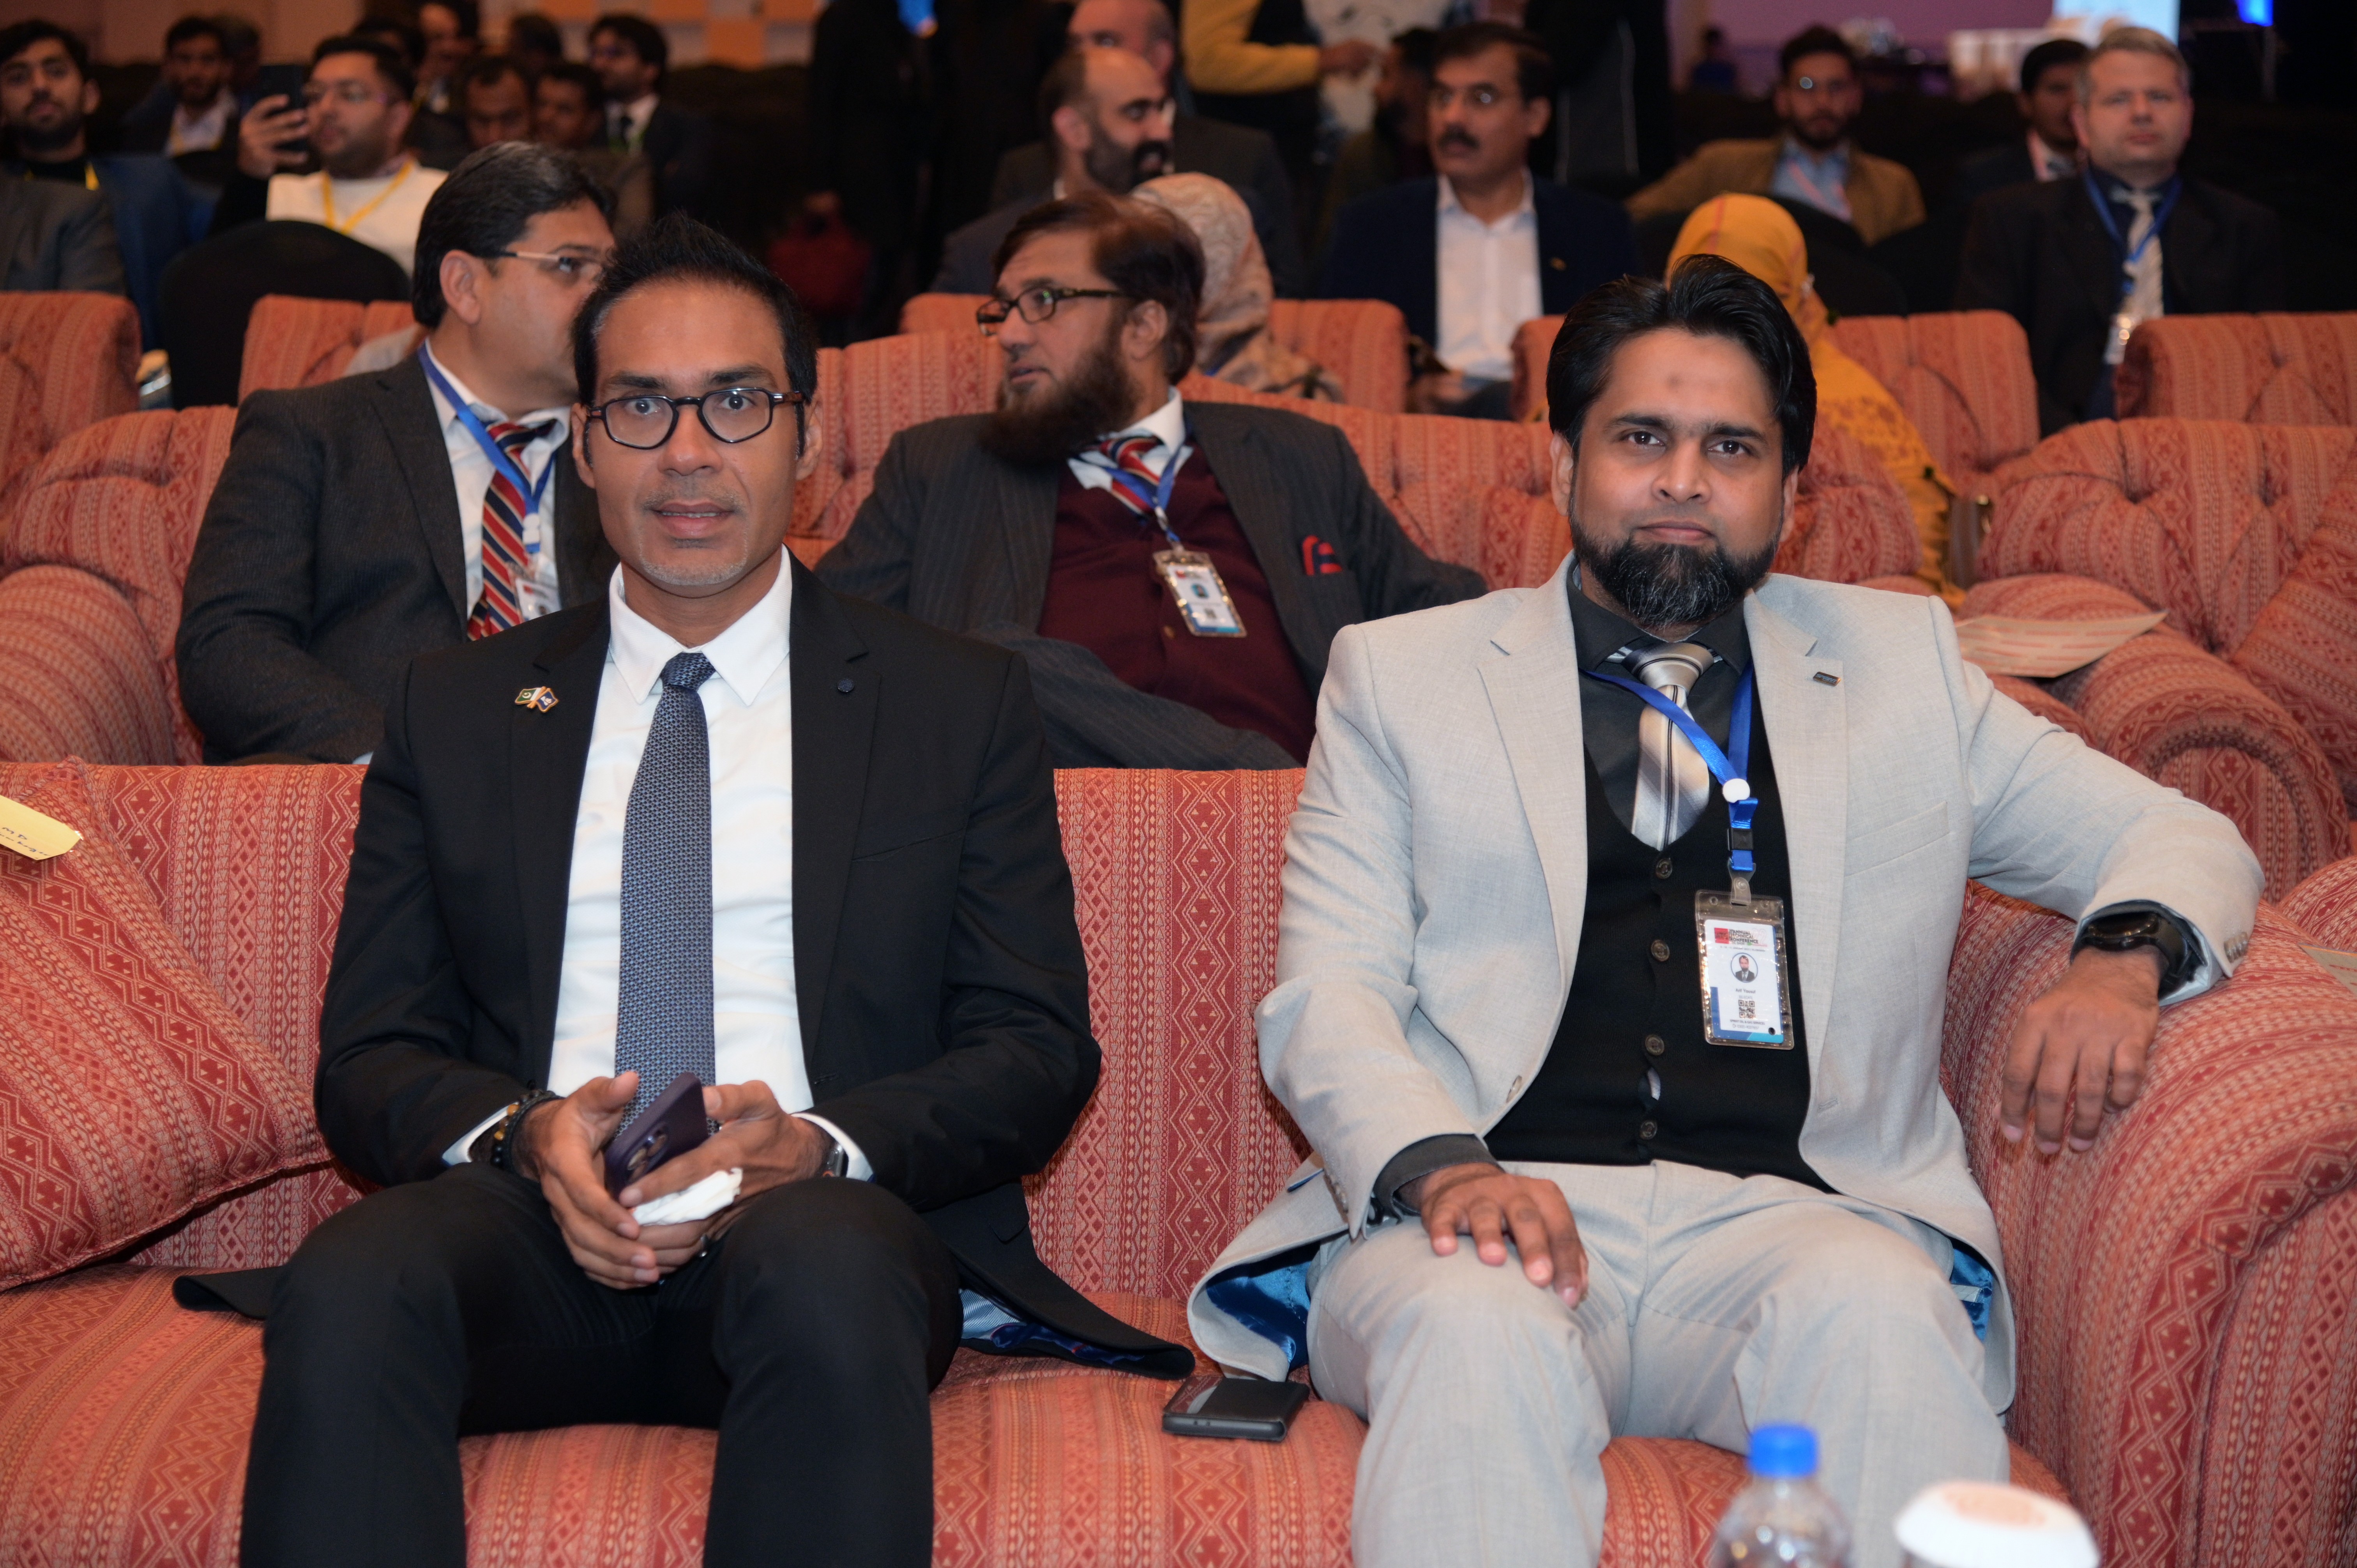 Mr Arif Yousaf a delegate member with MD Mr Ali from petroleum sector